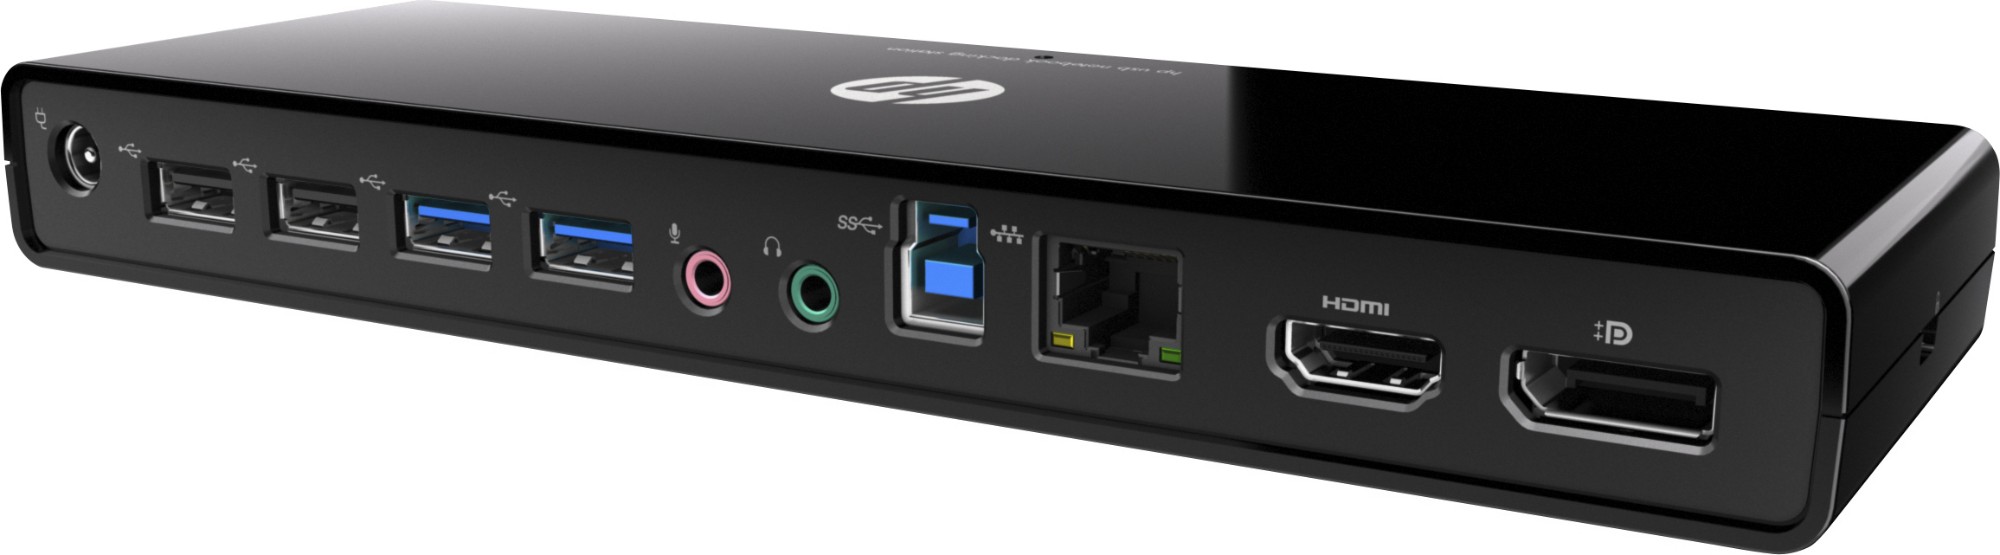 Buy HP 3005pr USB 3.0 Port Replicator - H1L08AA Online ...